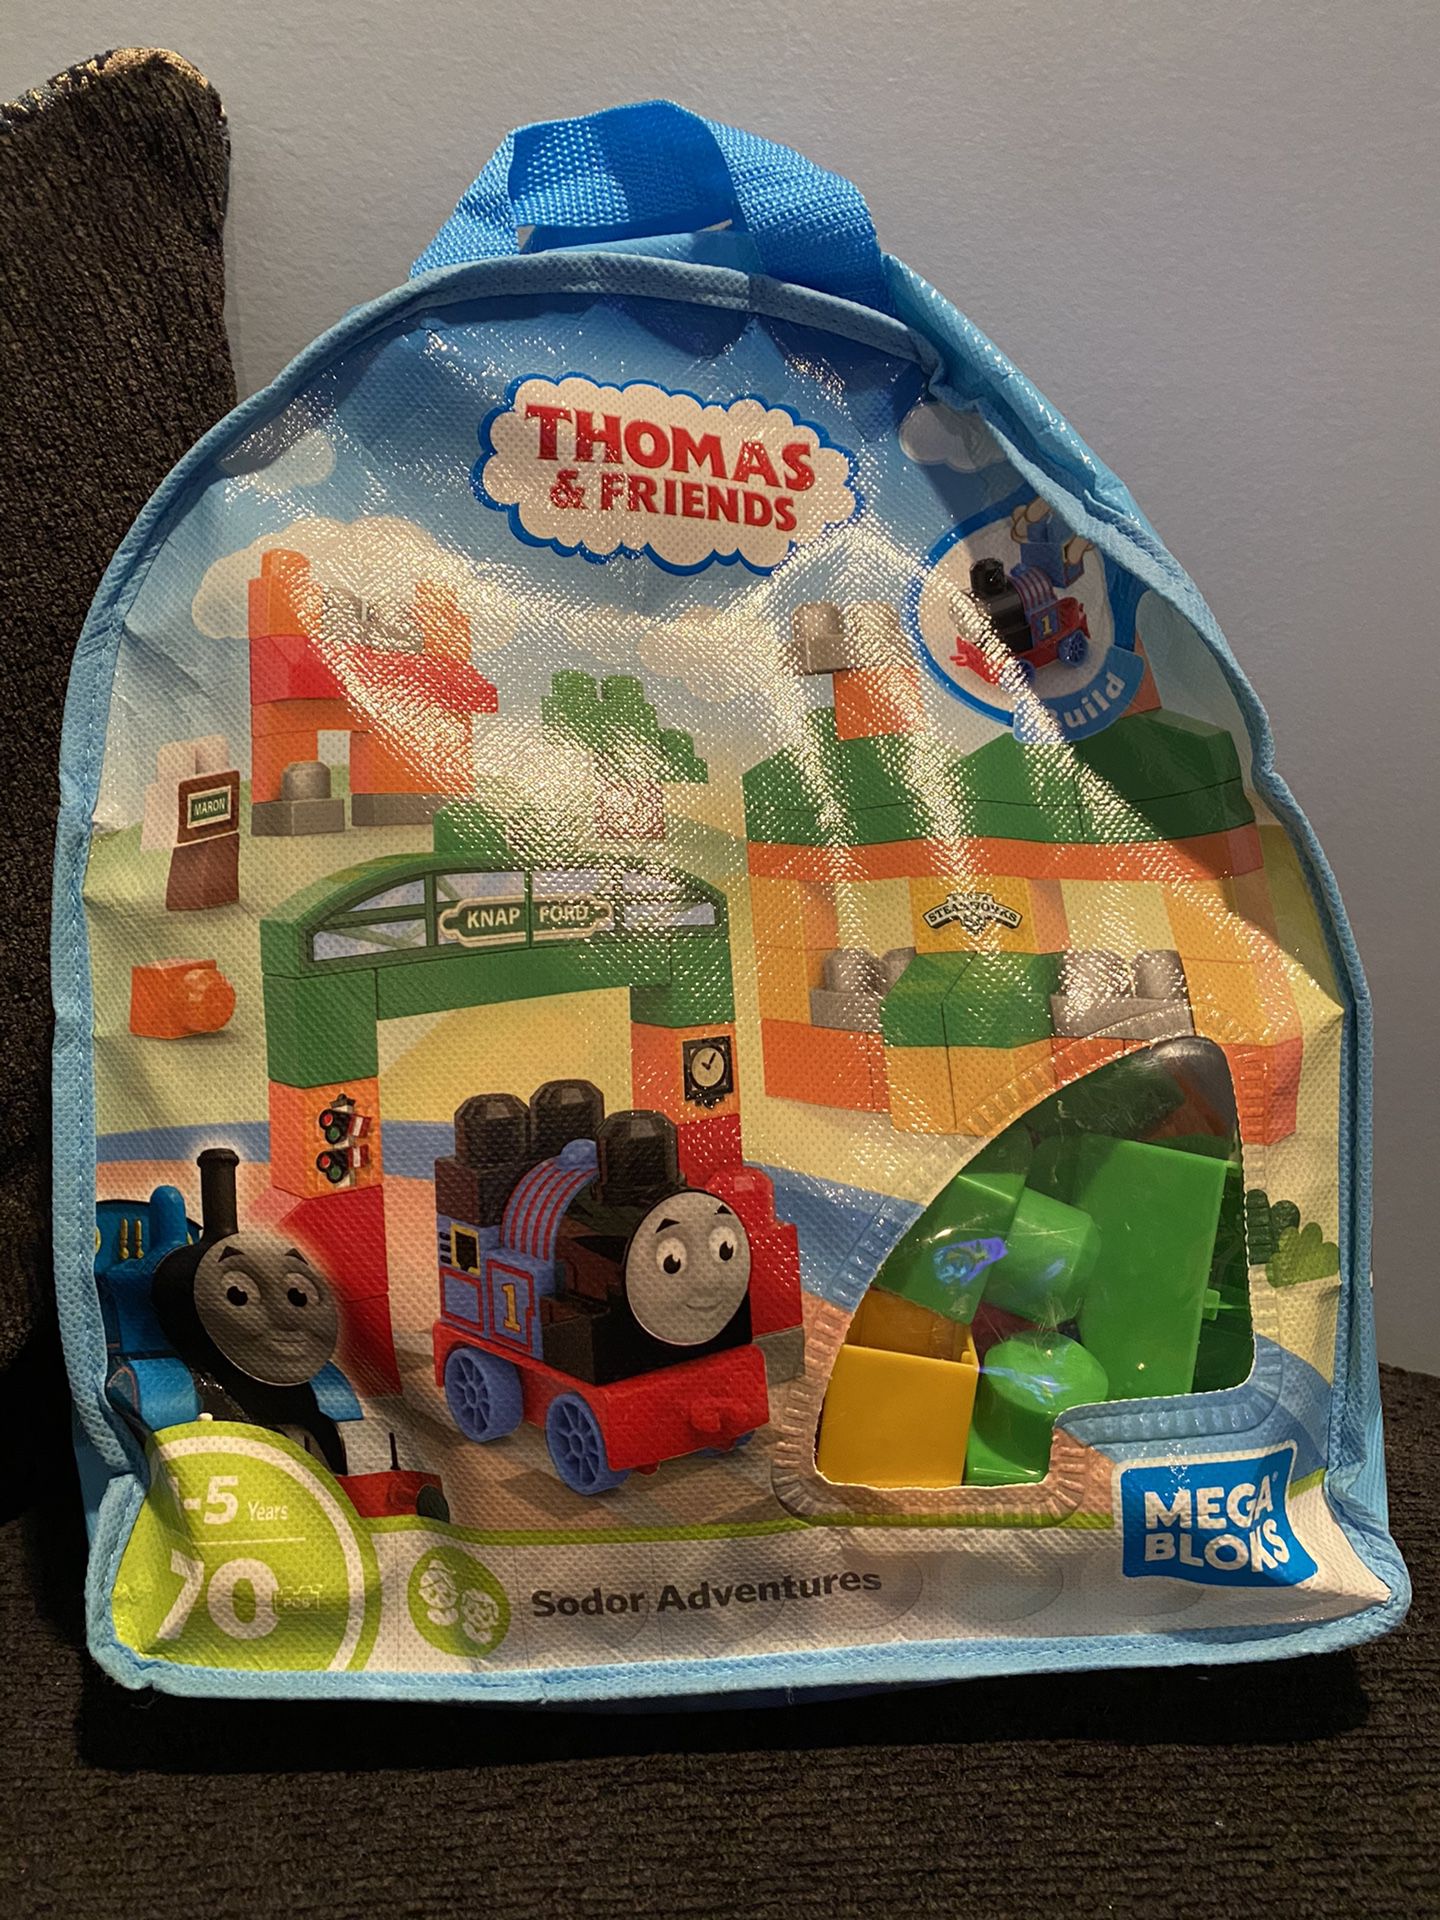 Thomas and friends mega blocks